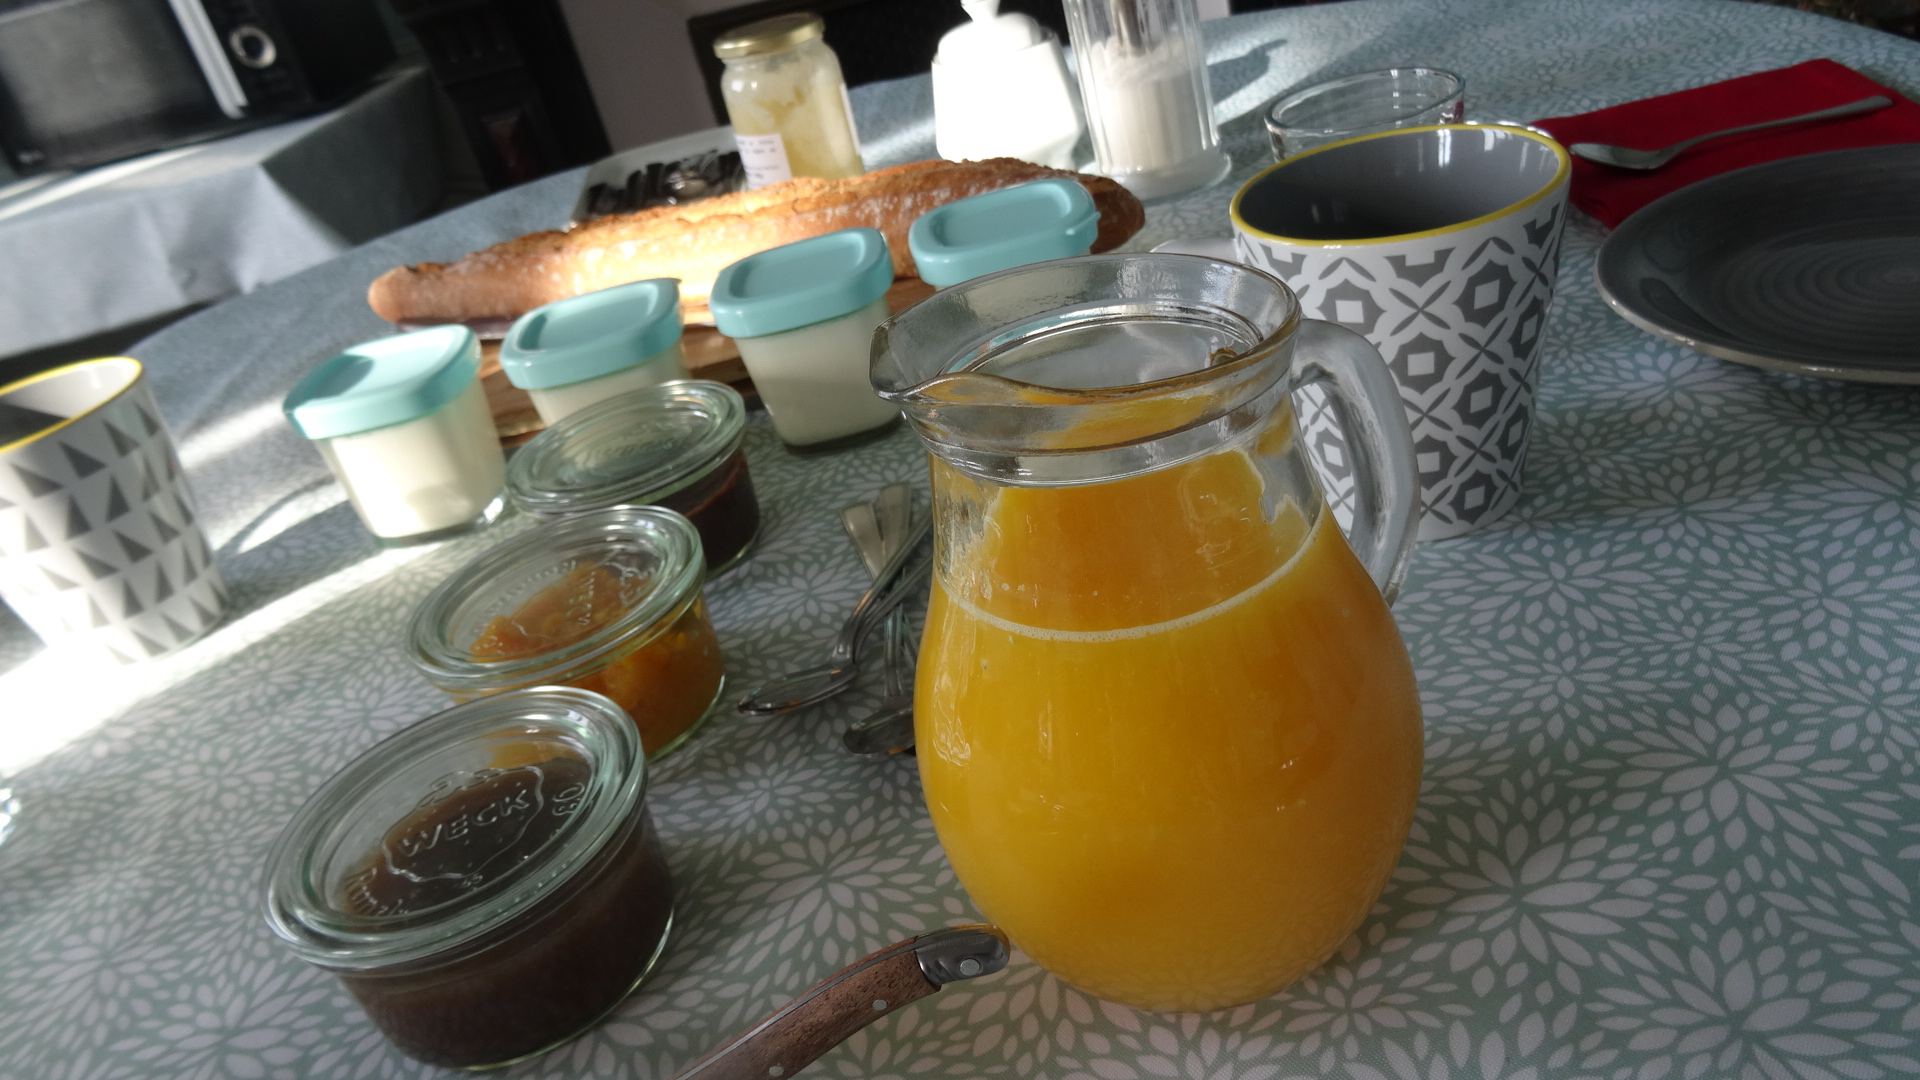 Homemade jams, fresh orange juice, homemade yogurts